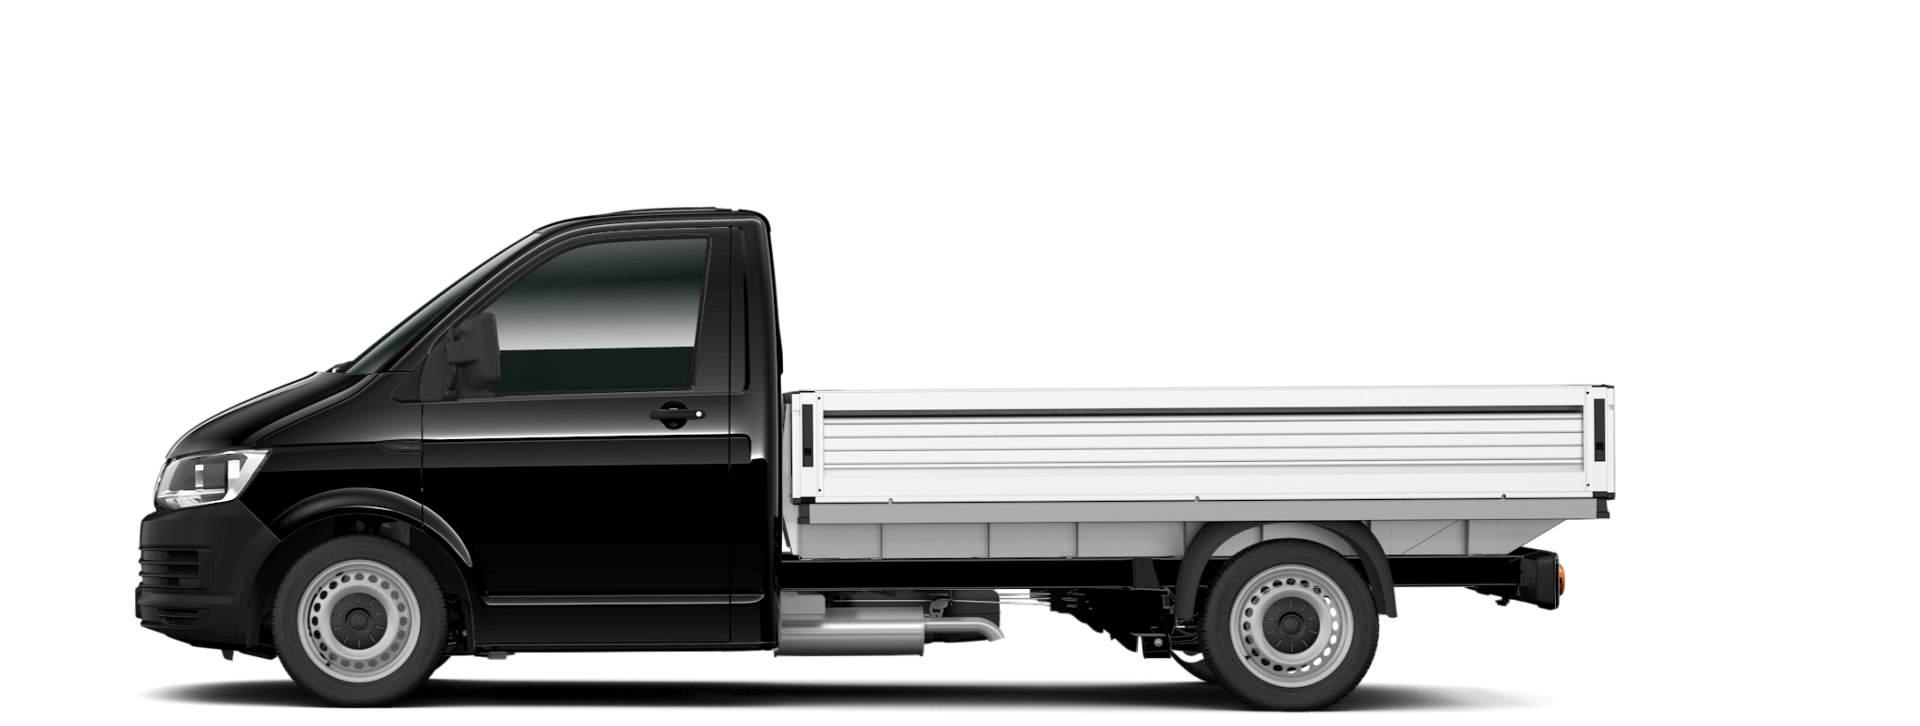 Transporter Dropside Van side-view